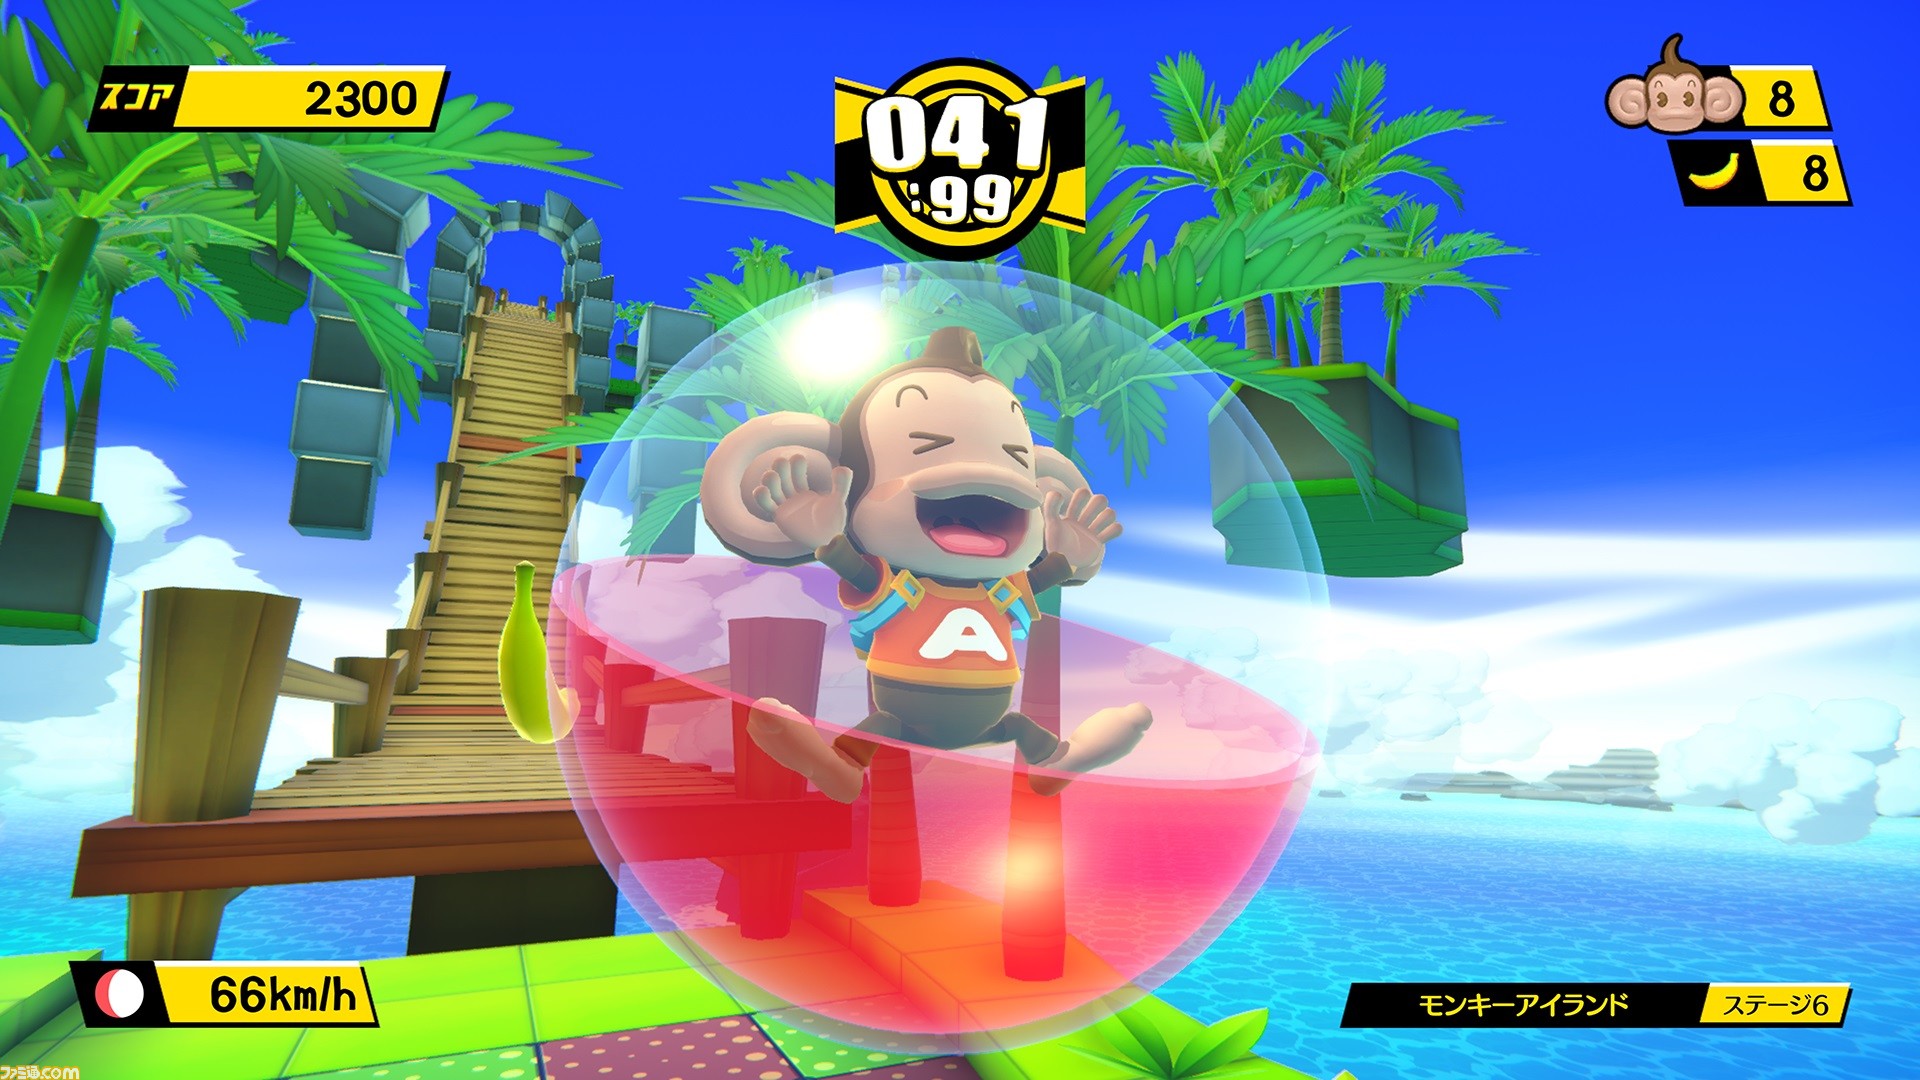 Check out the Super Monkey Ball: Banana Blitz HD gameplay trailer